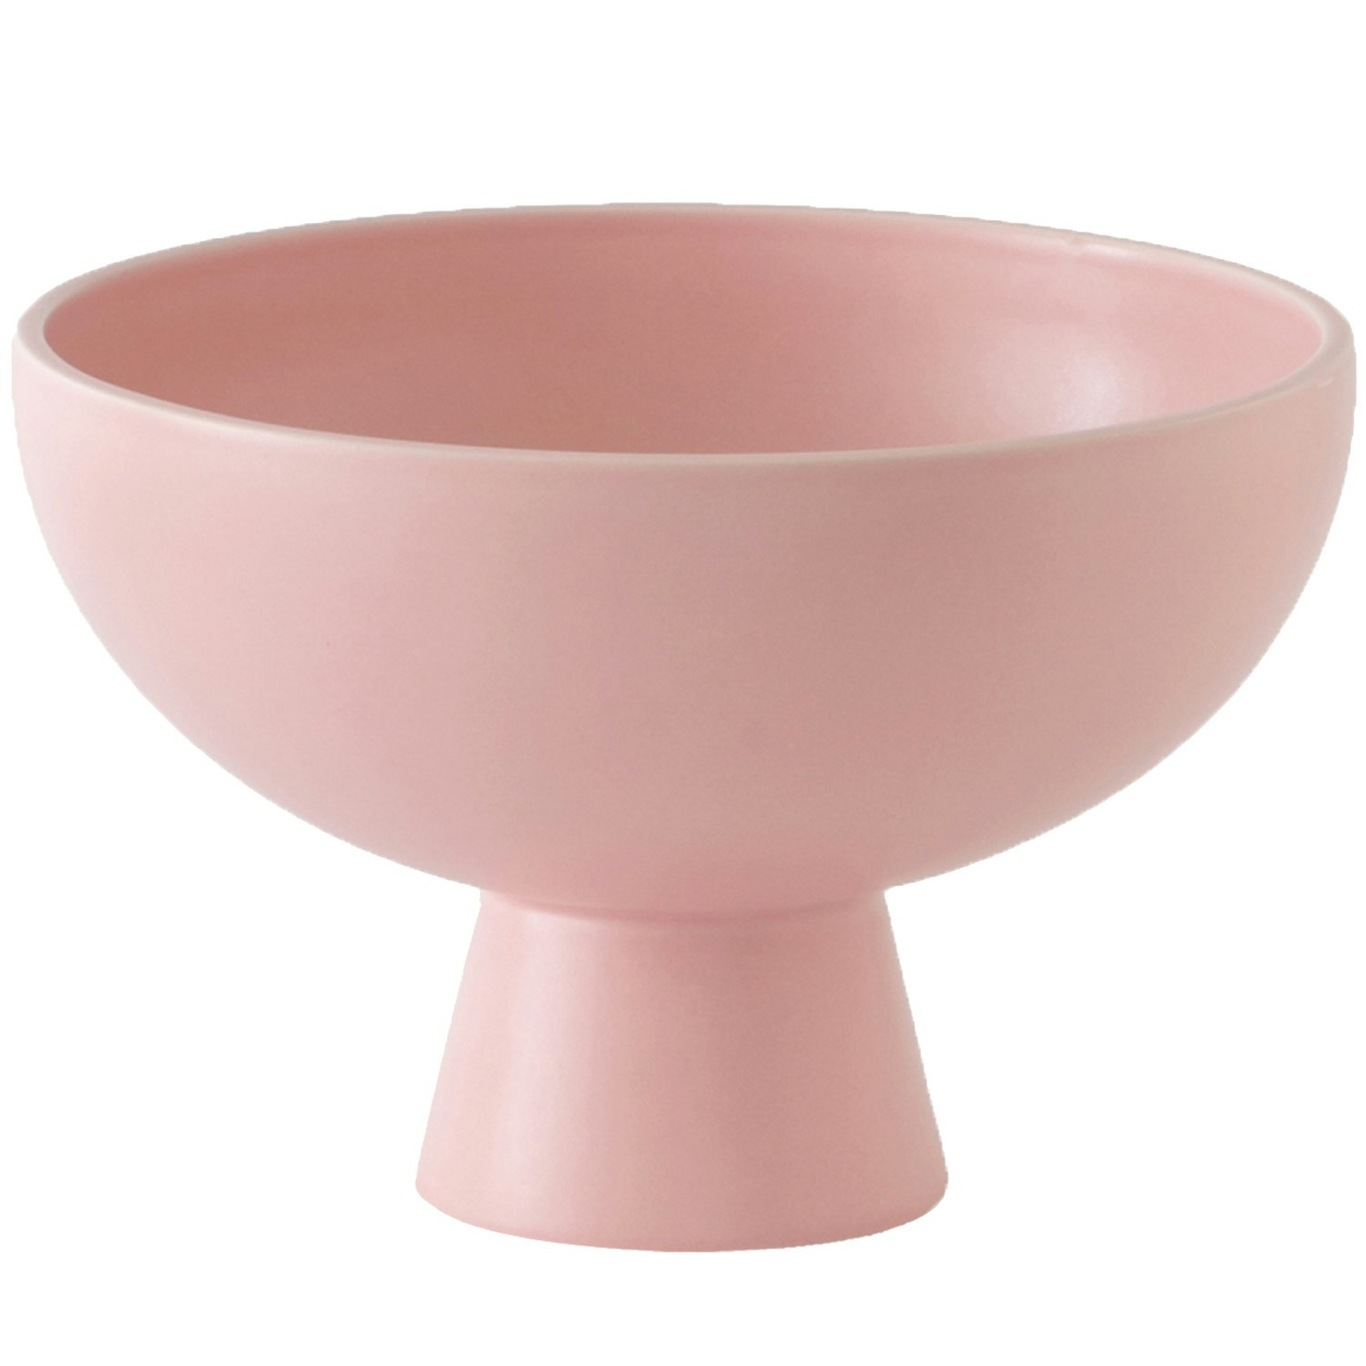 Strøm Bowl With Foot Ø15 cm, Coral Blush